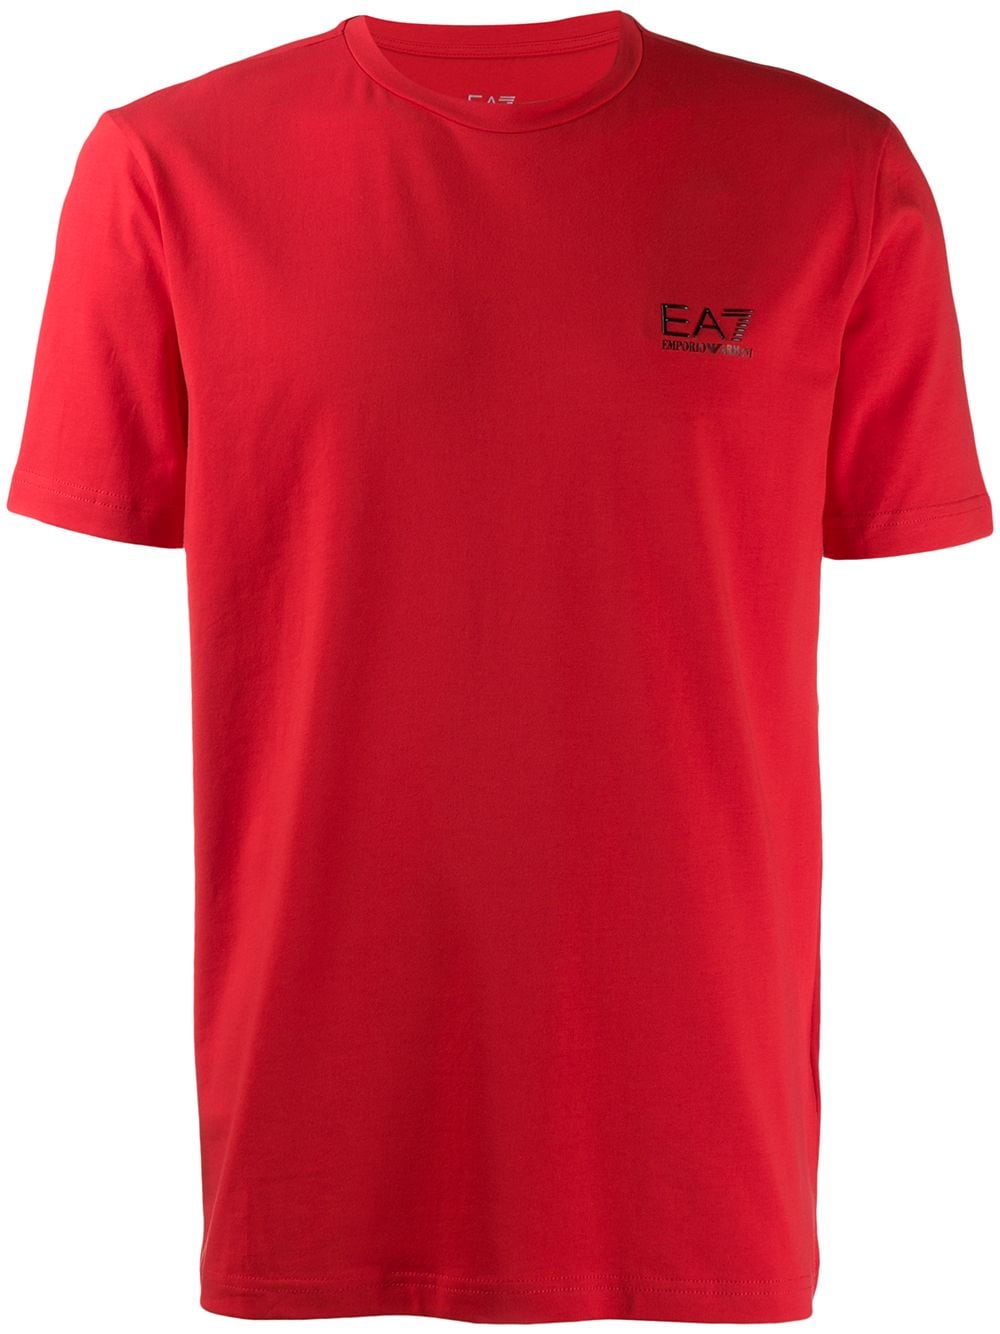 Ea7 Emporio Armani Printed Logo T-Shirt 